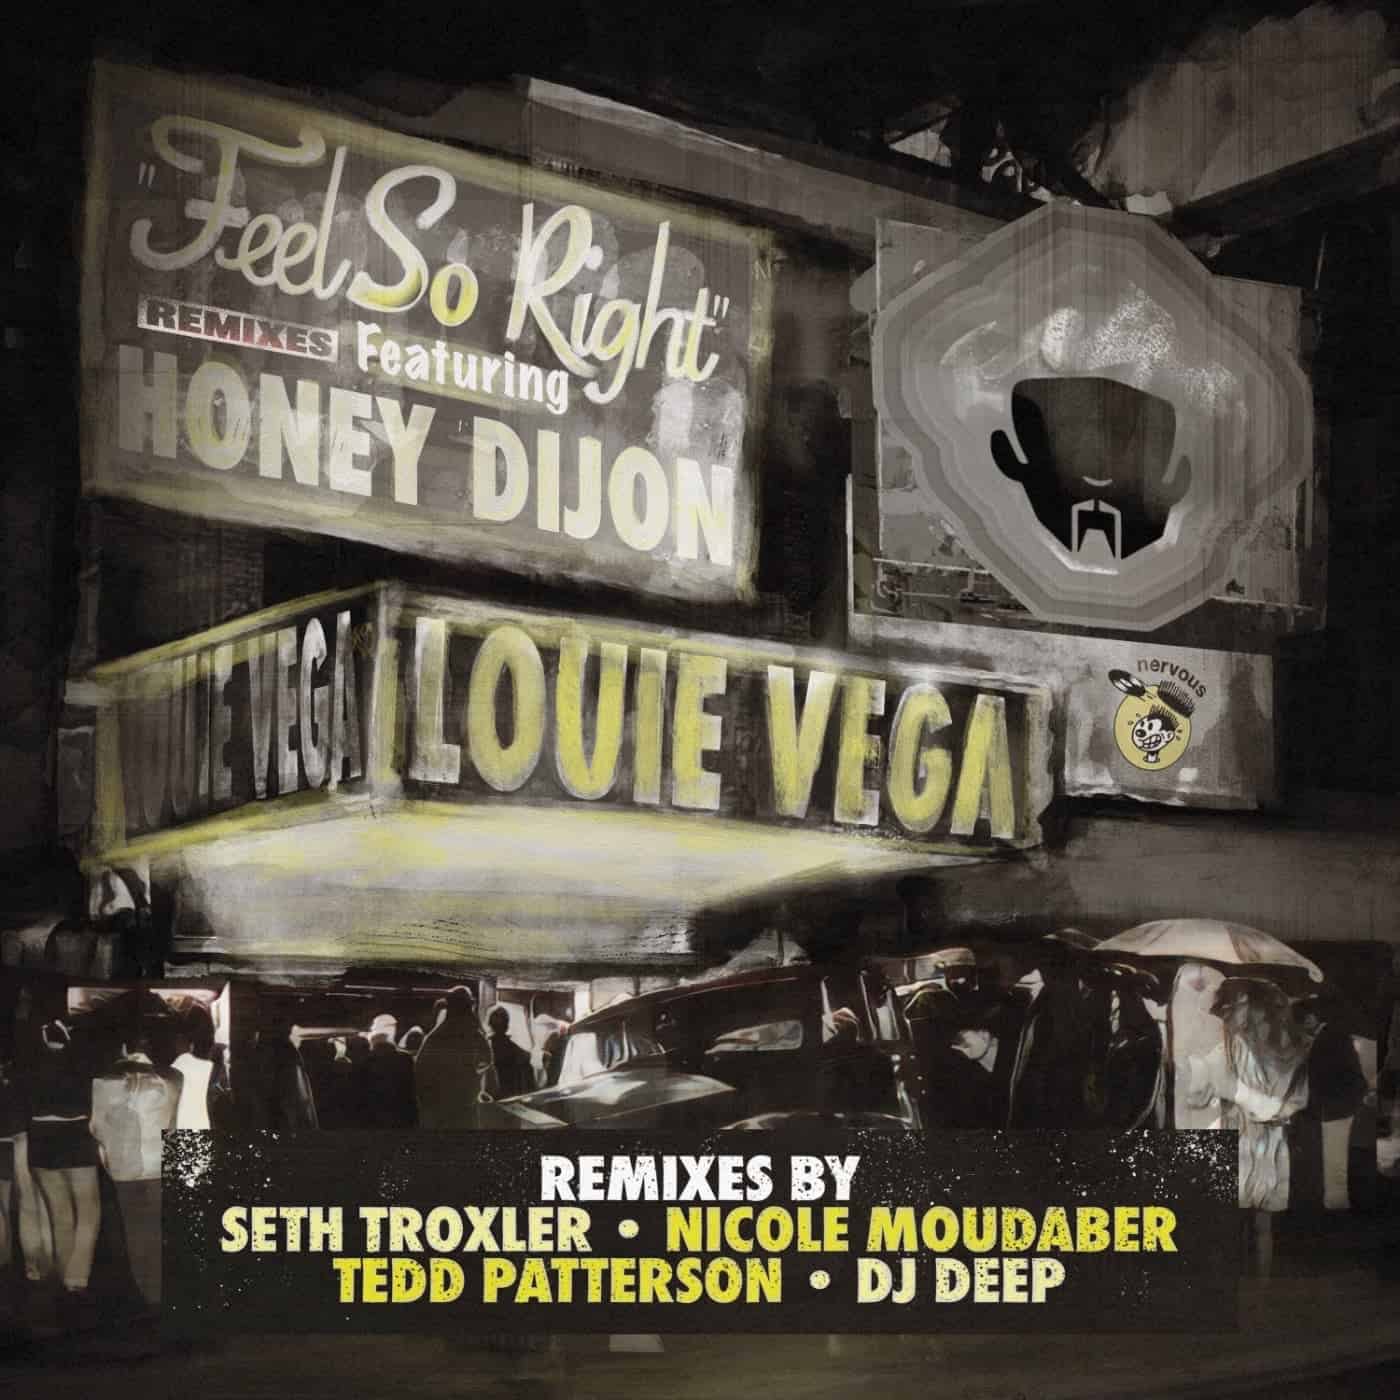 Release Cover: Honey Dijon, Louie Vega - Here We Go Feel So Right feat. Honey Dijon (Remixes) on Electrobuzz